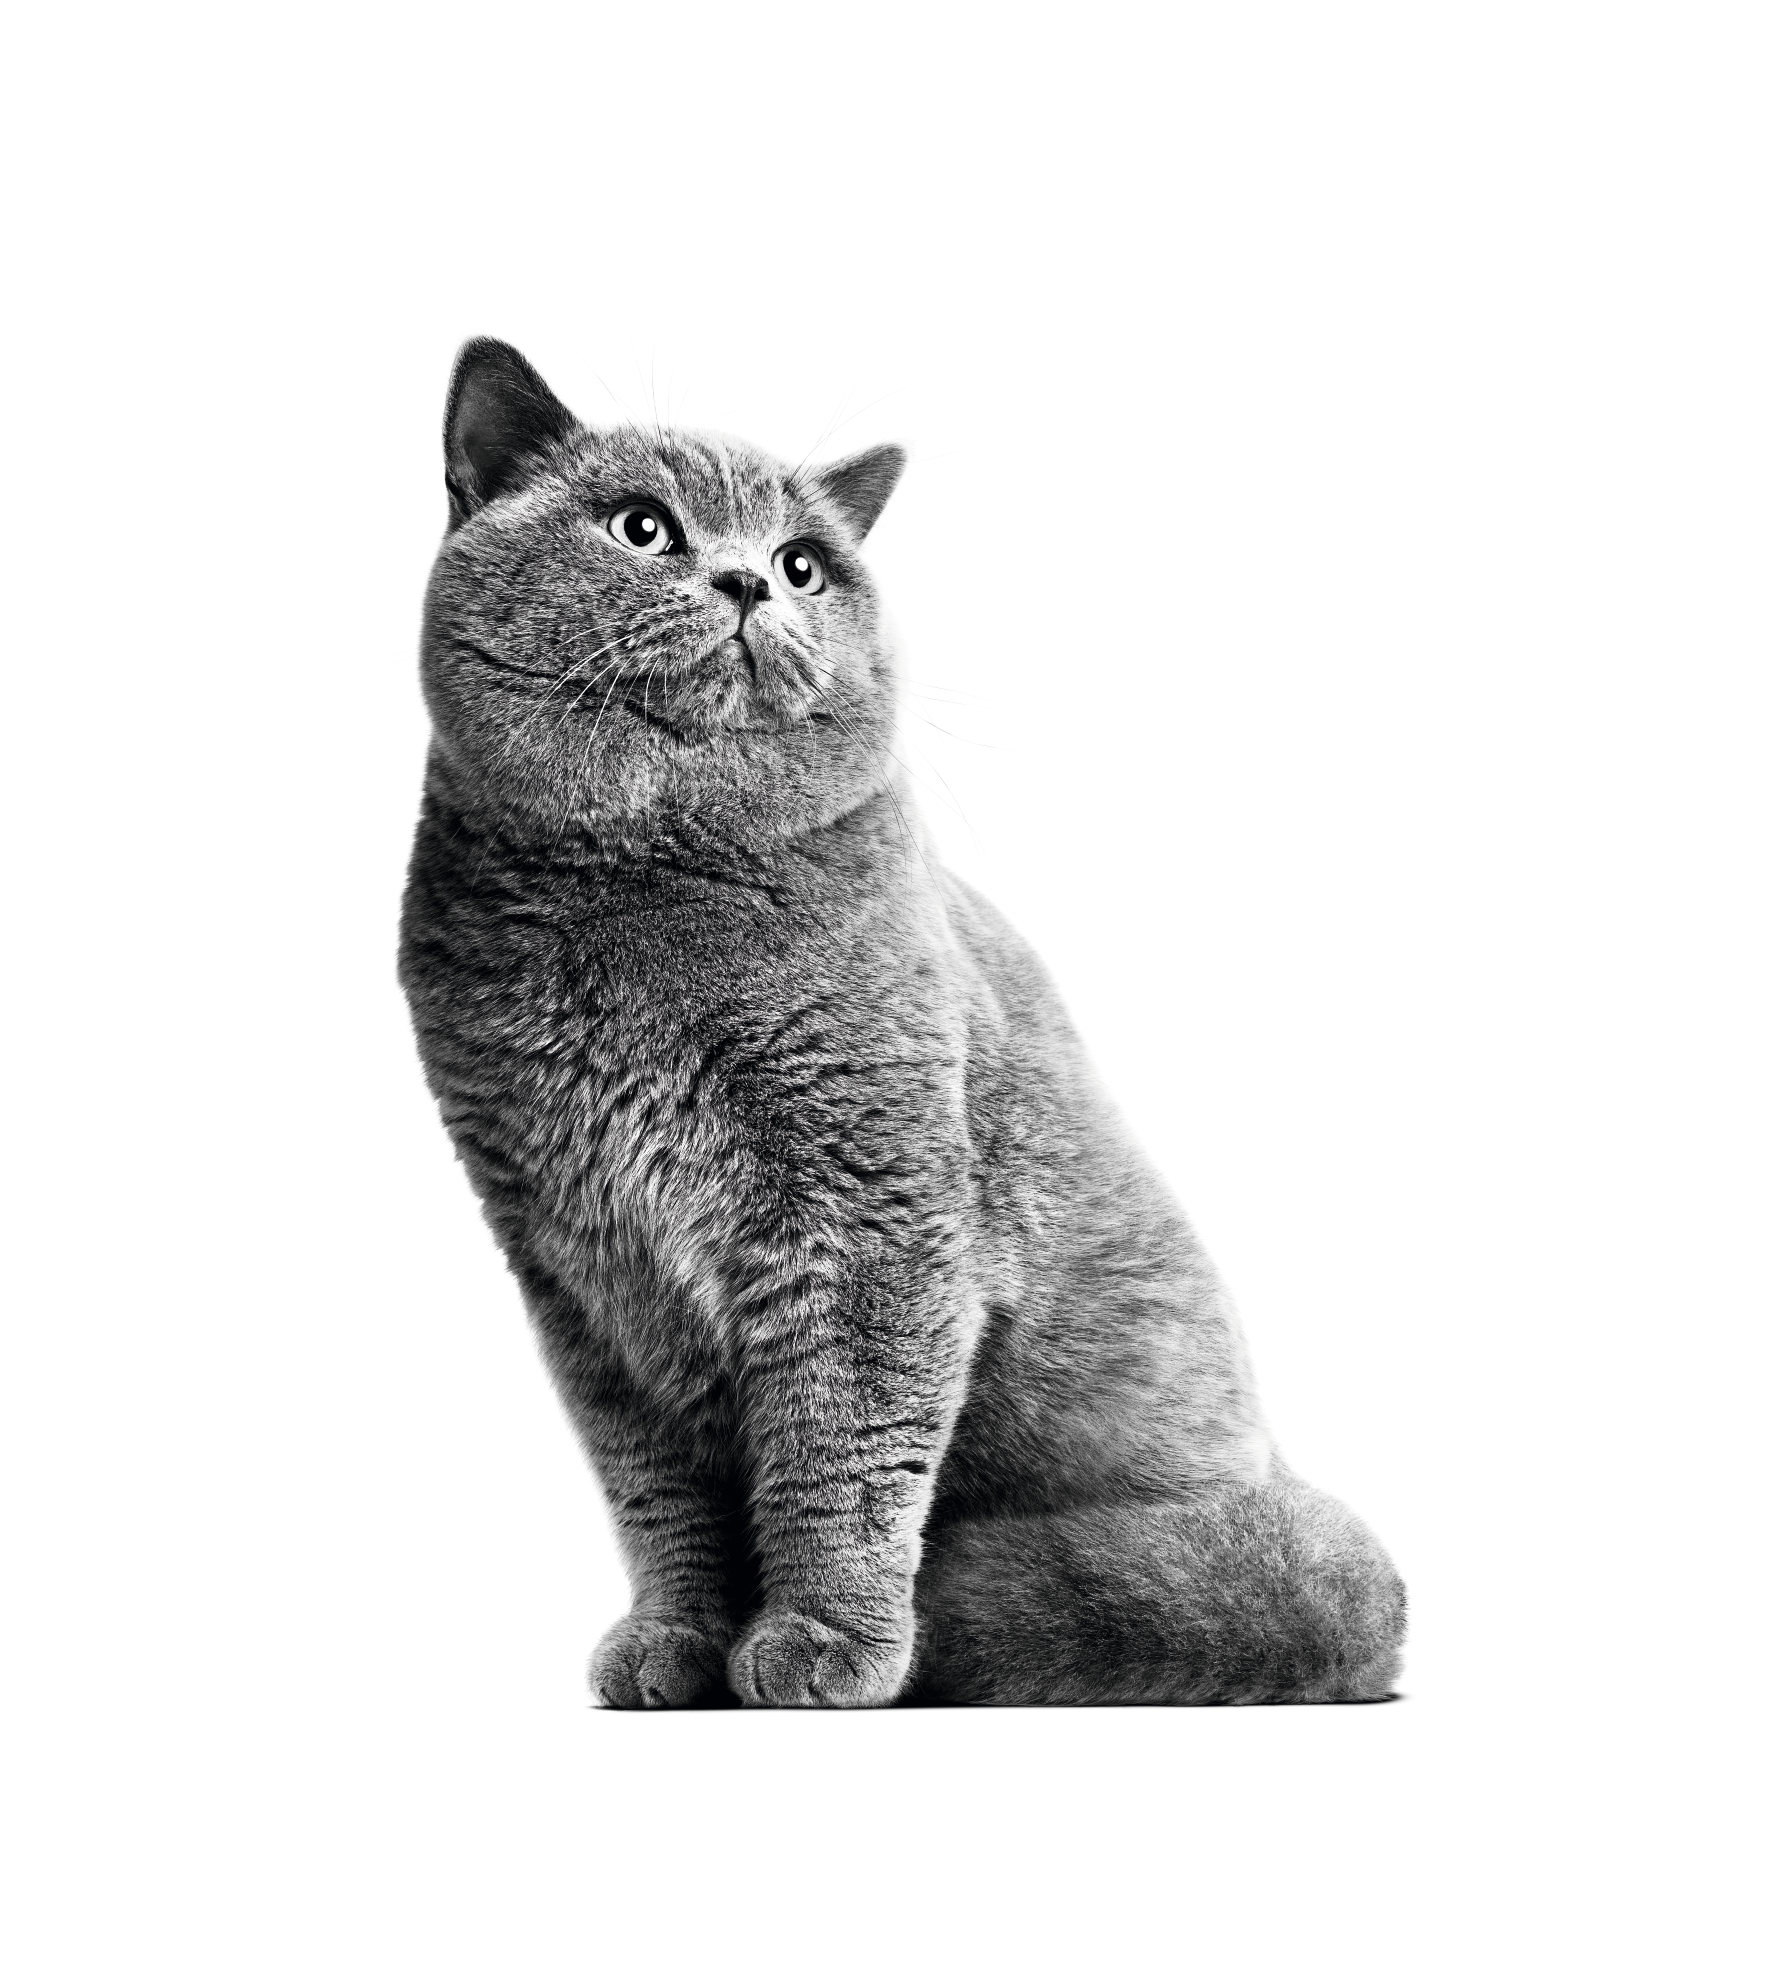 Kucing British Shorthair dewasa duduk dalam warna hitam putih pada latar belakang putih